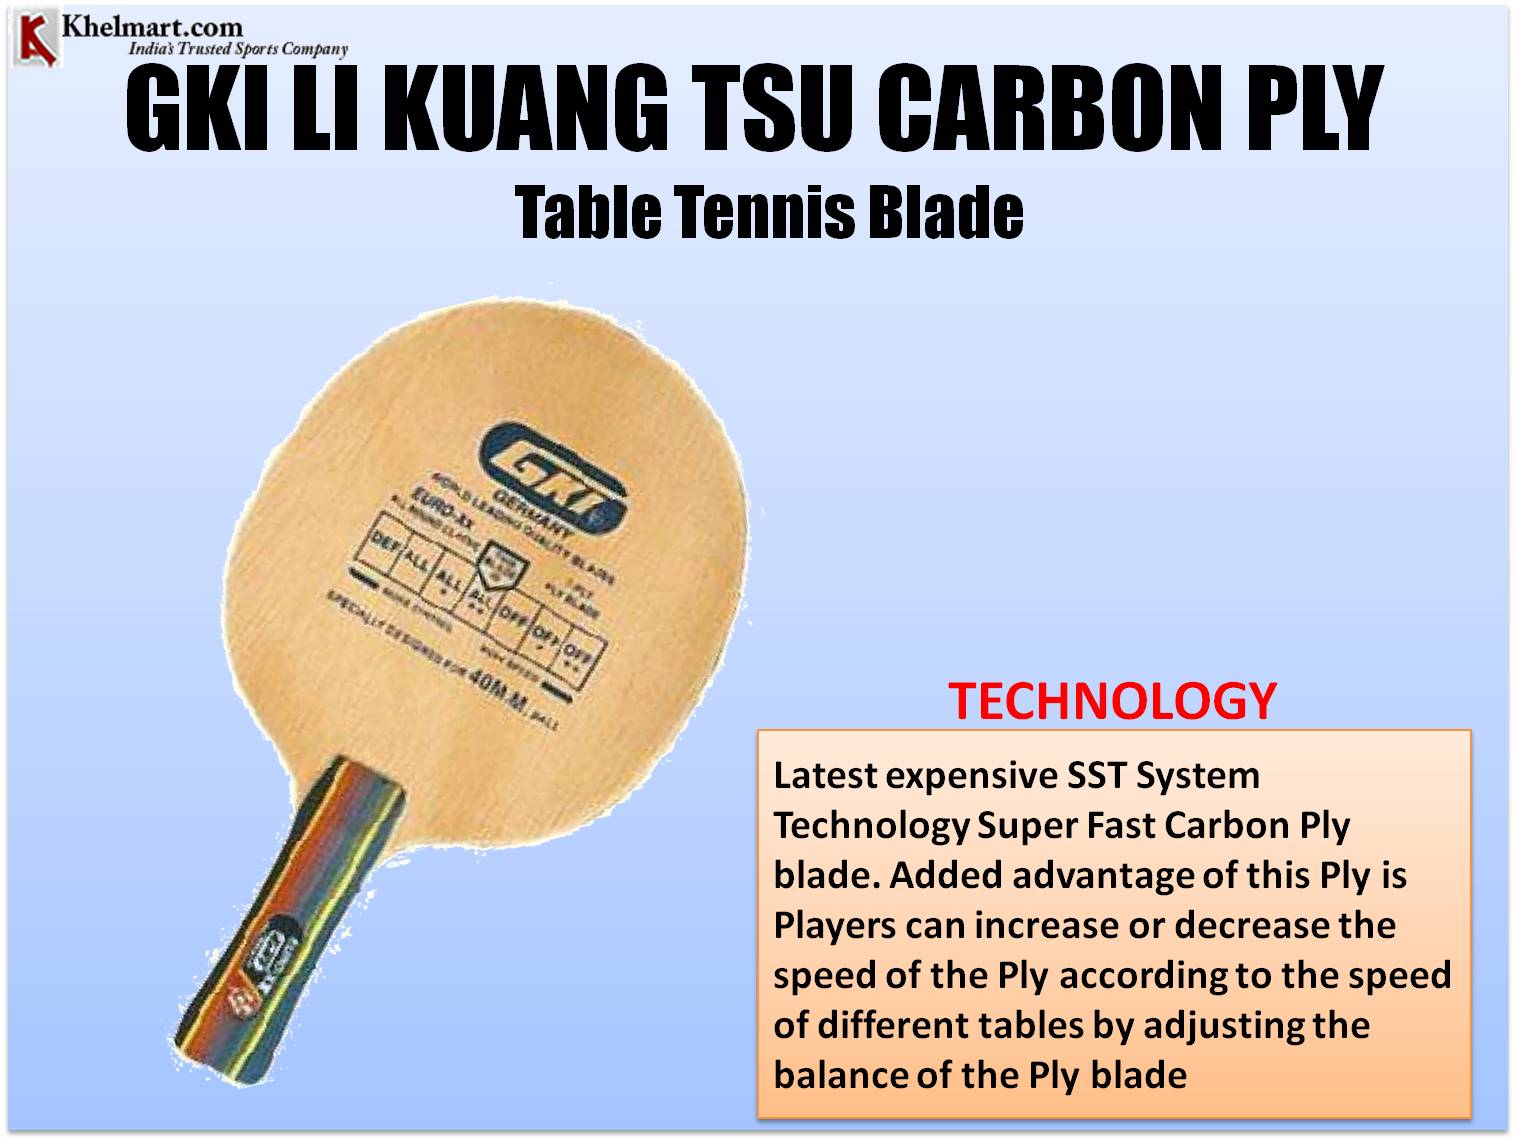 GKI_LI_KUANG_TSU_CARBON_PLY_Table_Tennis_Blade.jpg